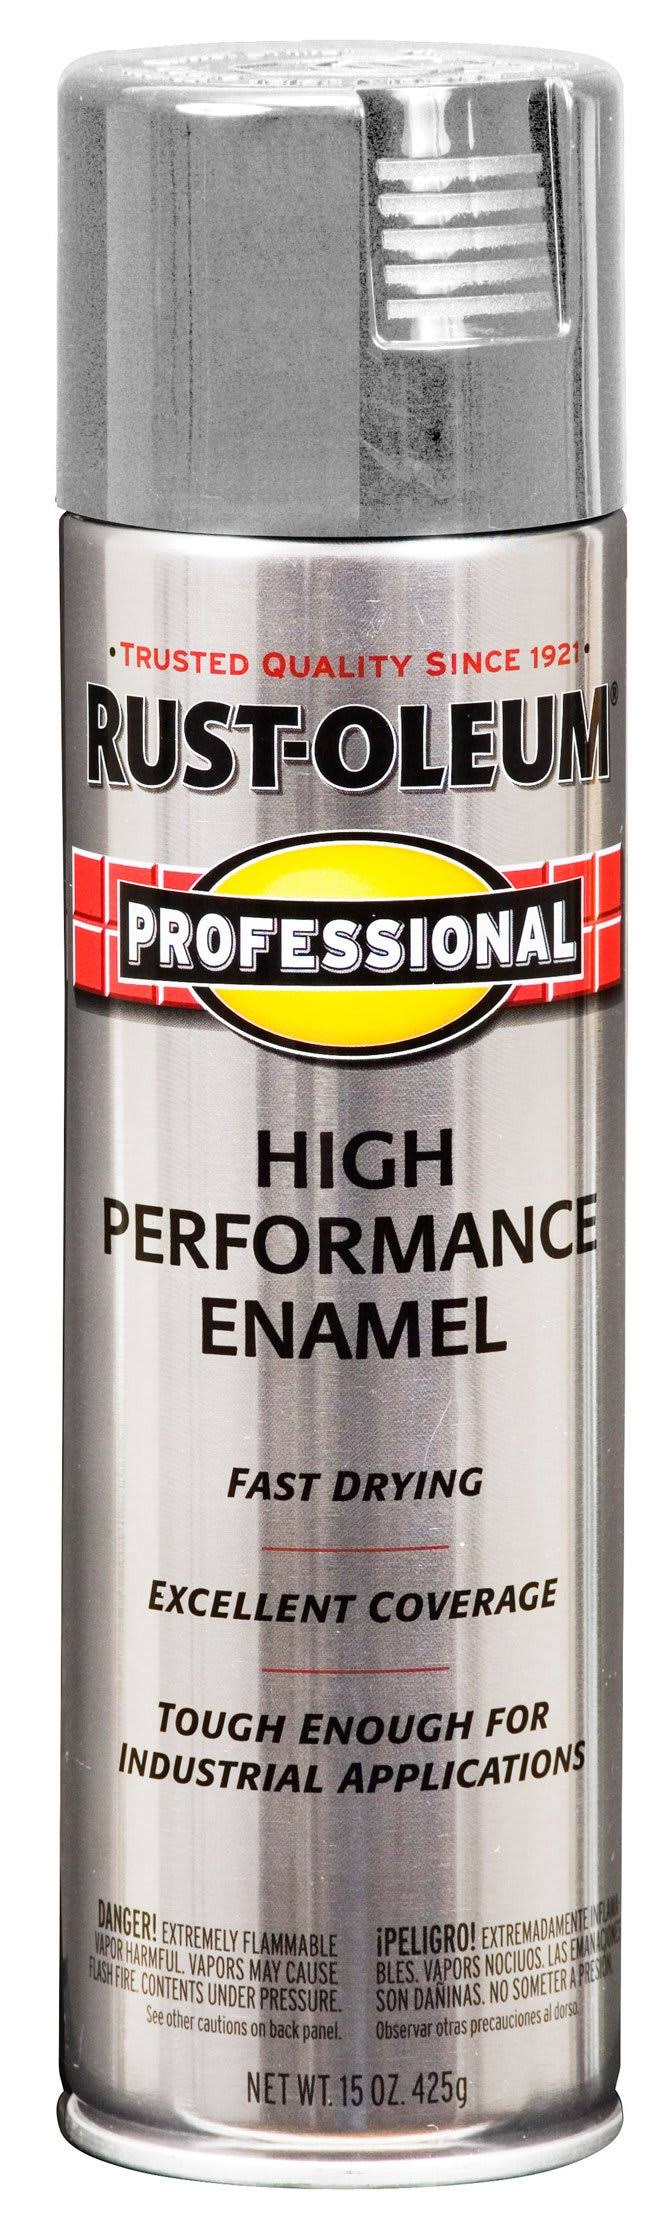 Rust Oleum Professional High Performance Enamel Spray Paint - Light Machine Gray, 15oz